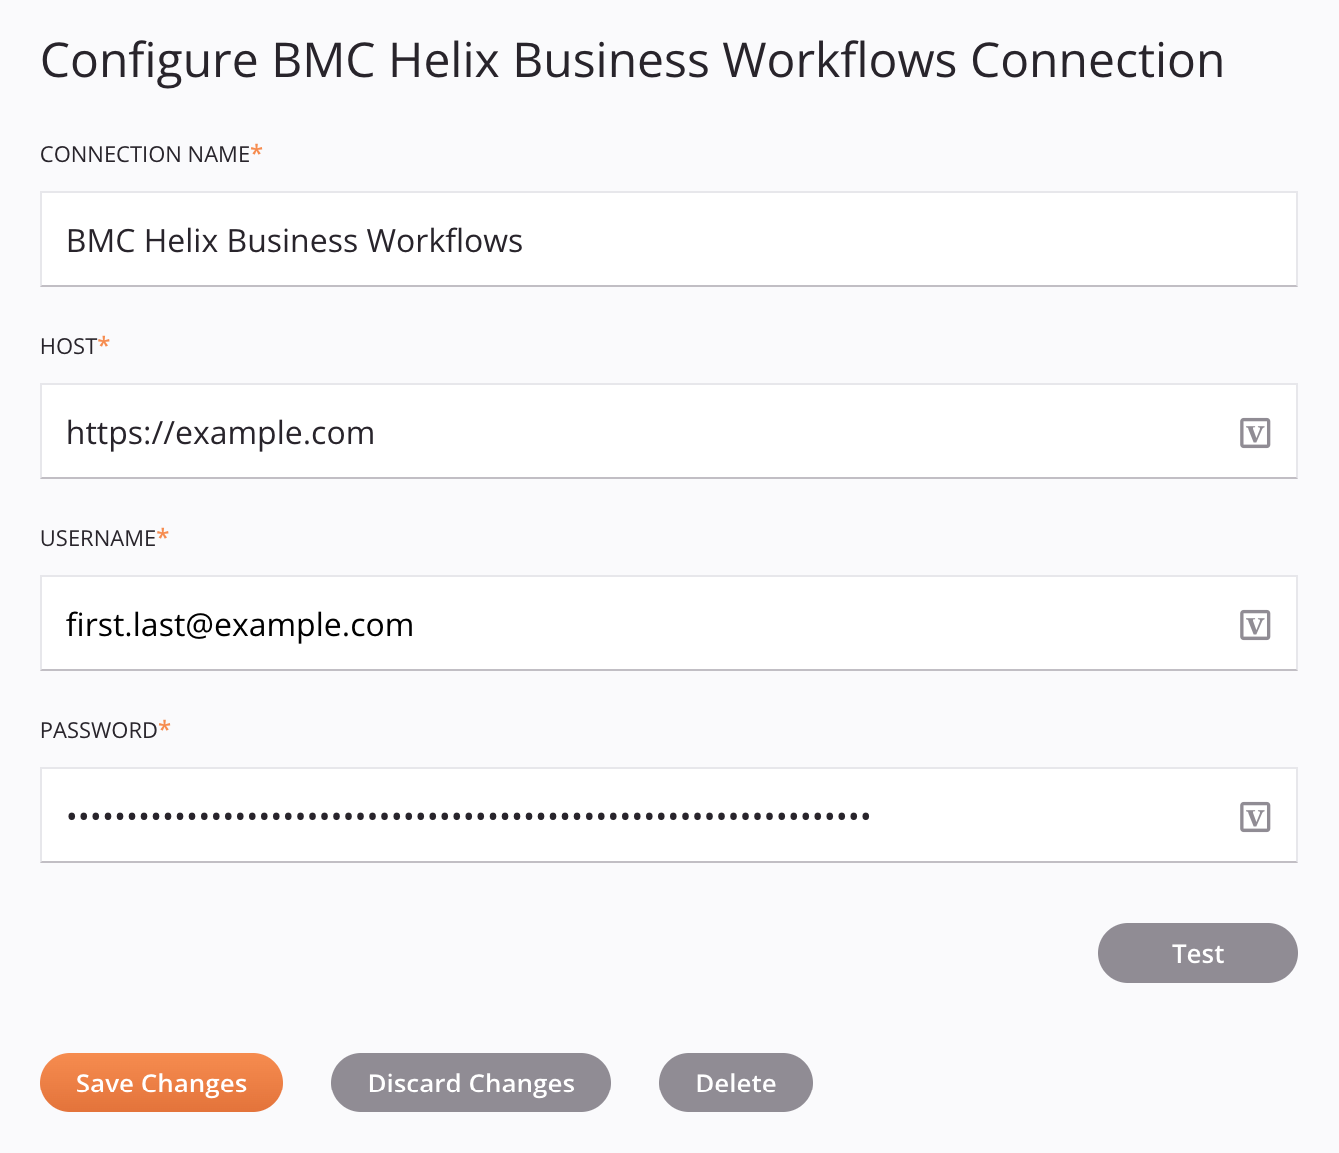 BMC Helix Business Workflows connection configuration